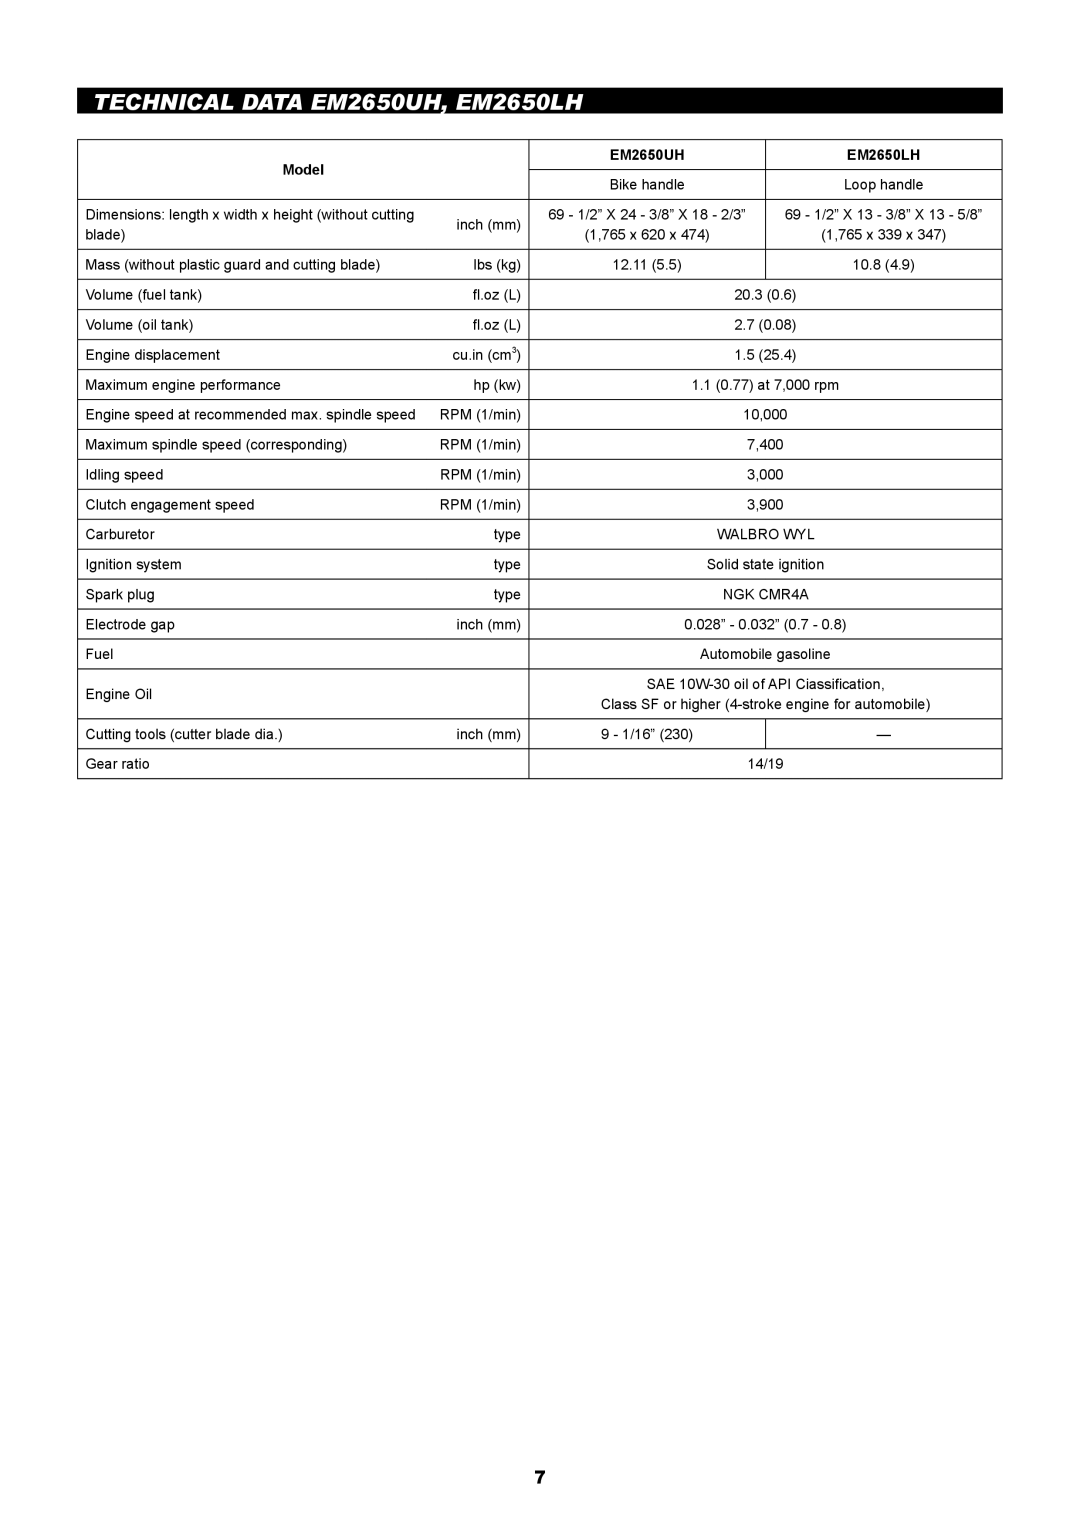 Makita manual TECHNICAL DATA EM2650UH, EM2650LH, Model 